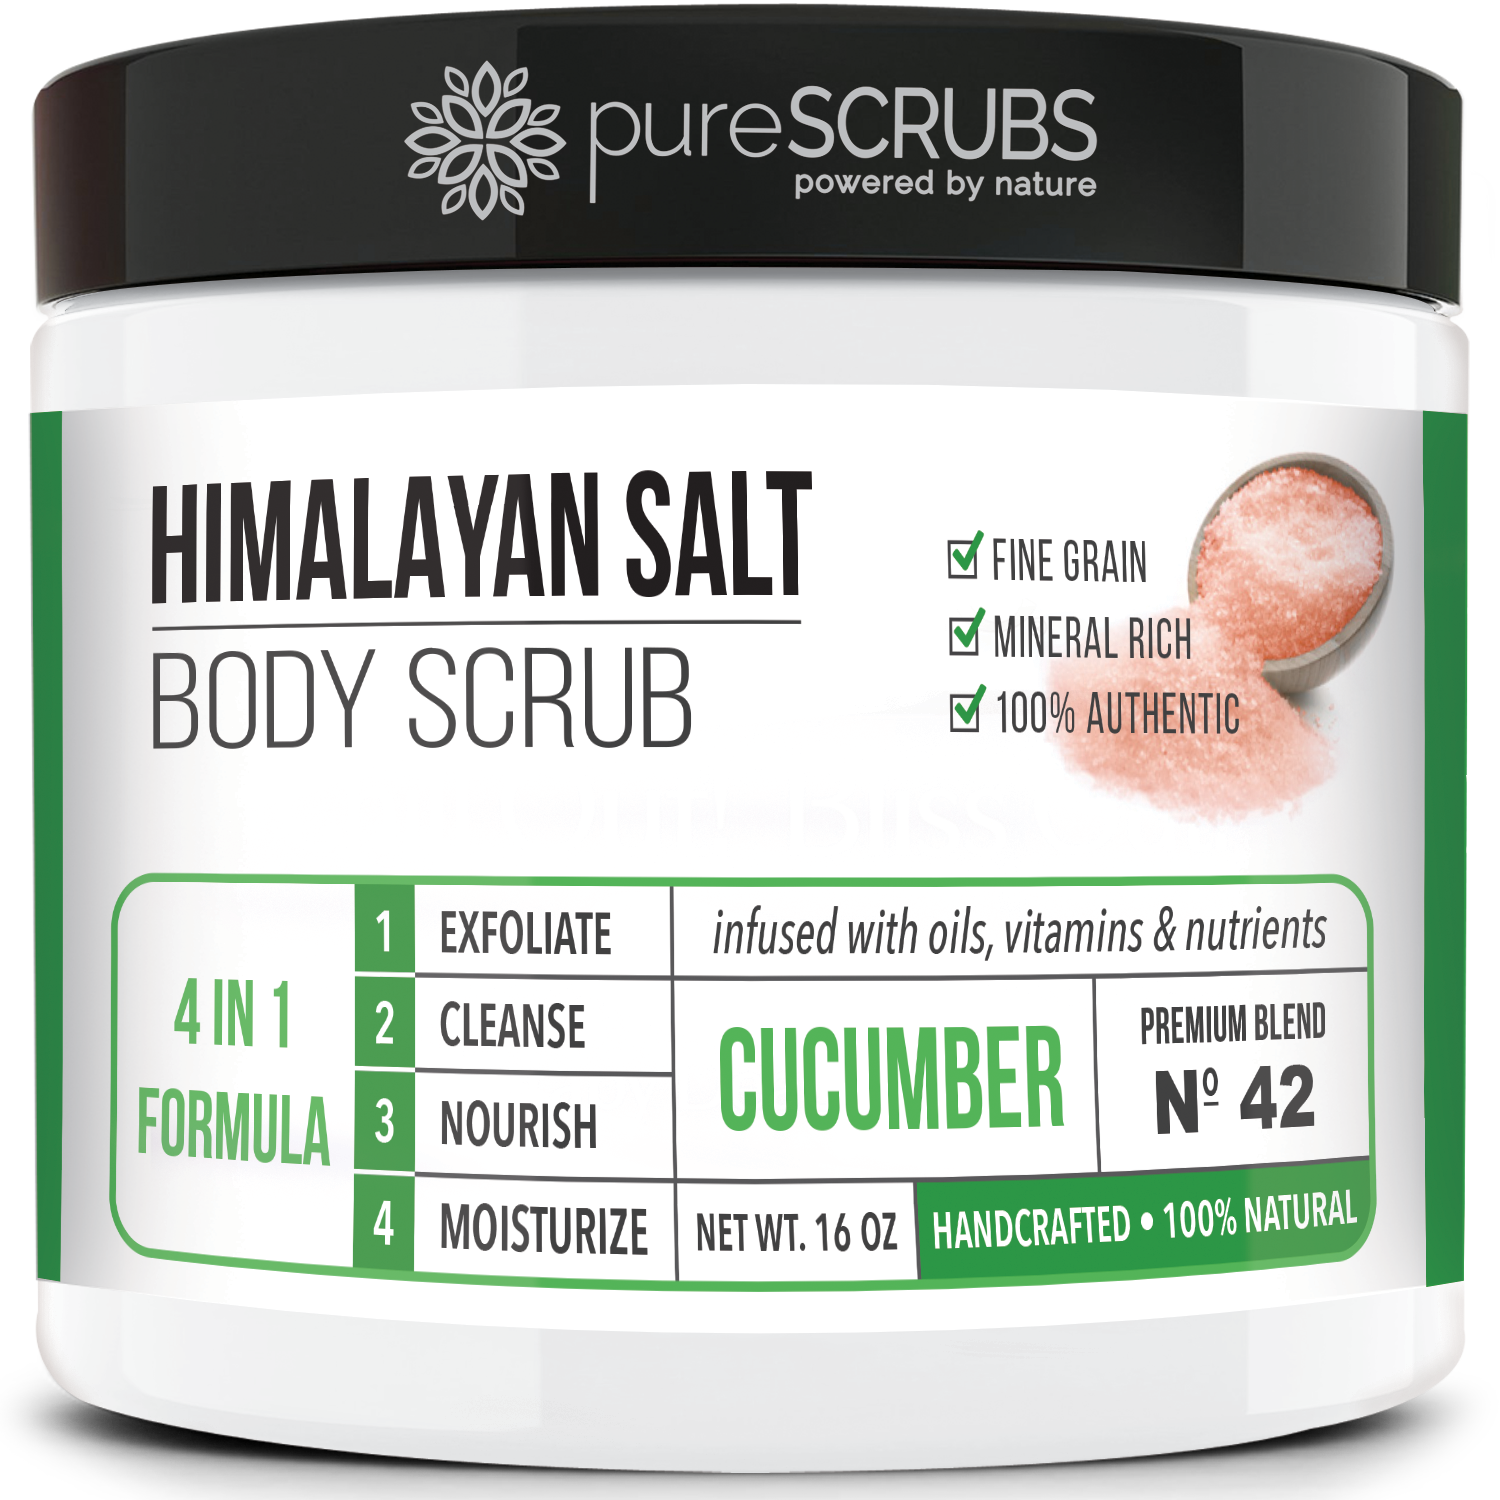 Cucumber Body Scrub / Pink Himalayan Salt / Premium Blend #42